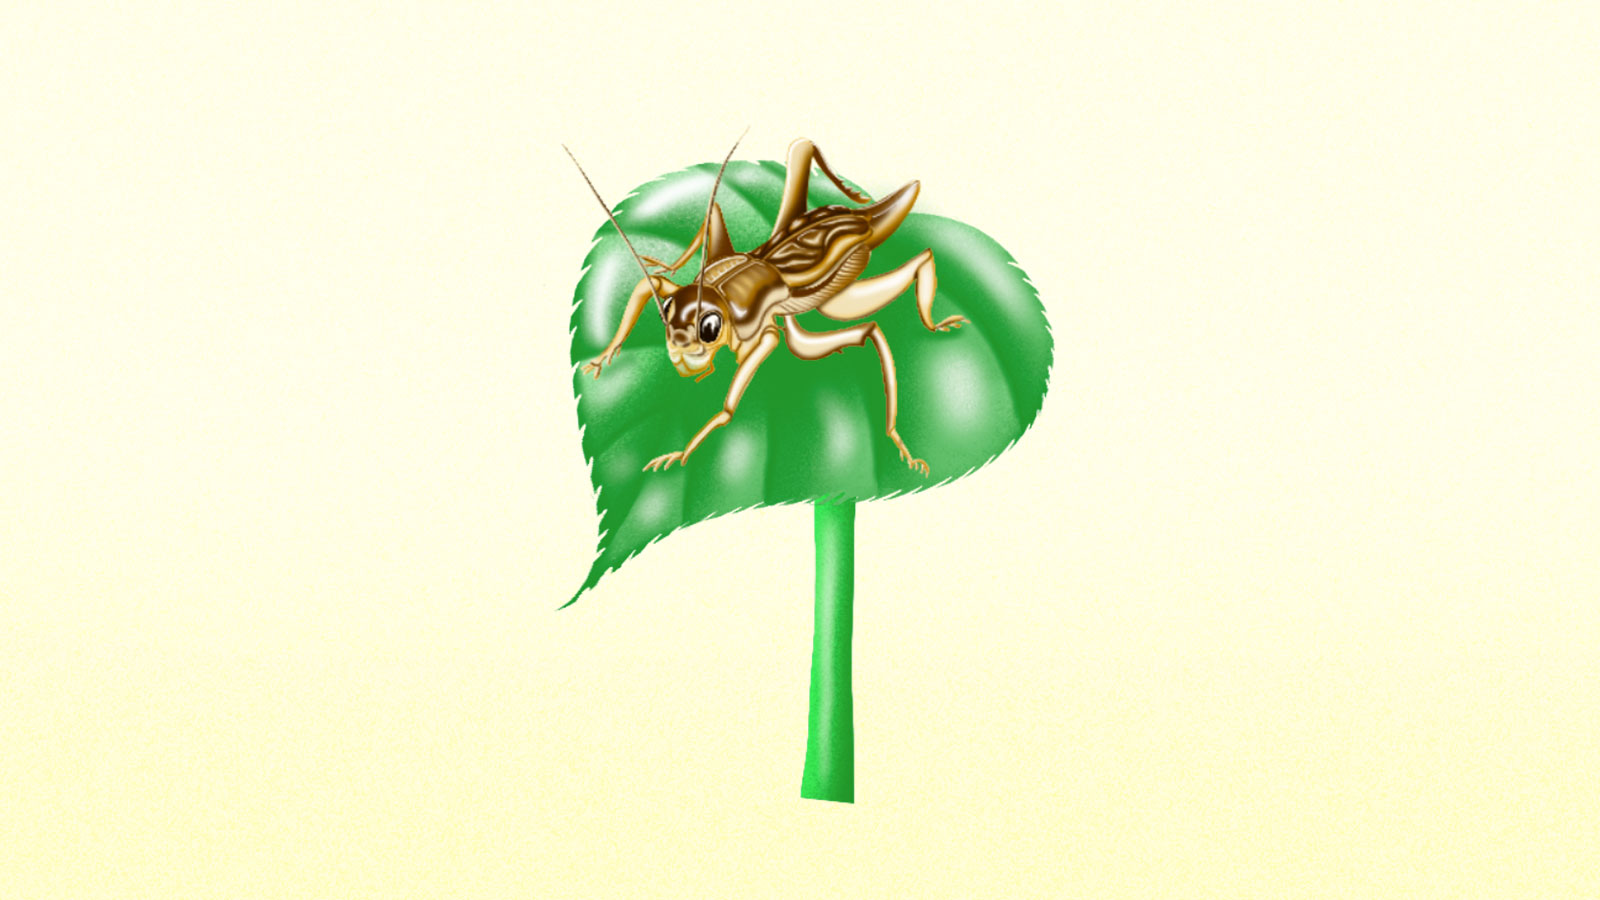 Illustration of cricket atop leaf on cream background